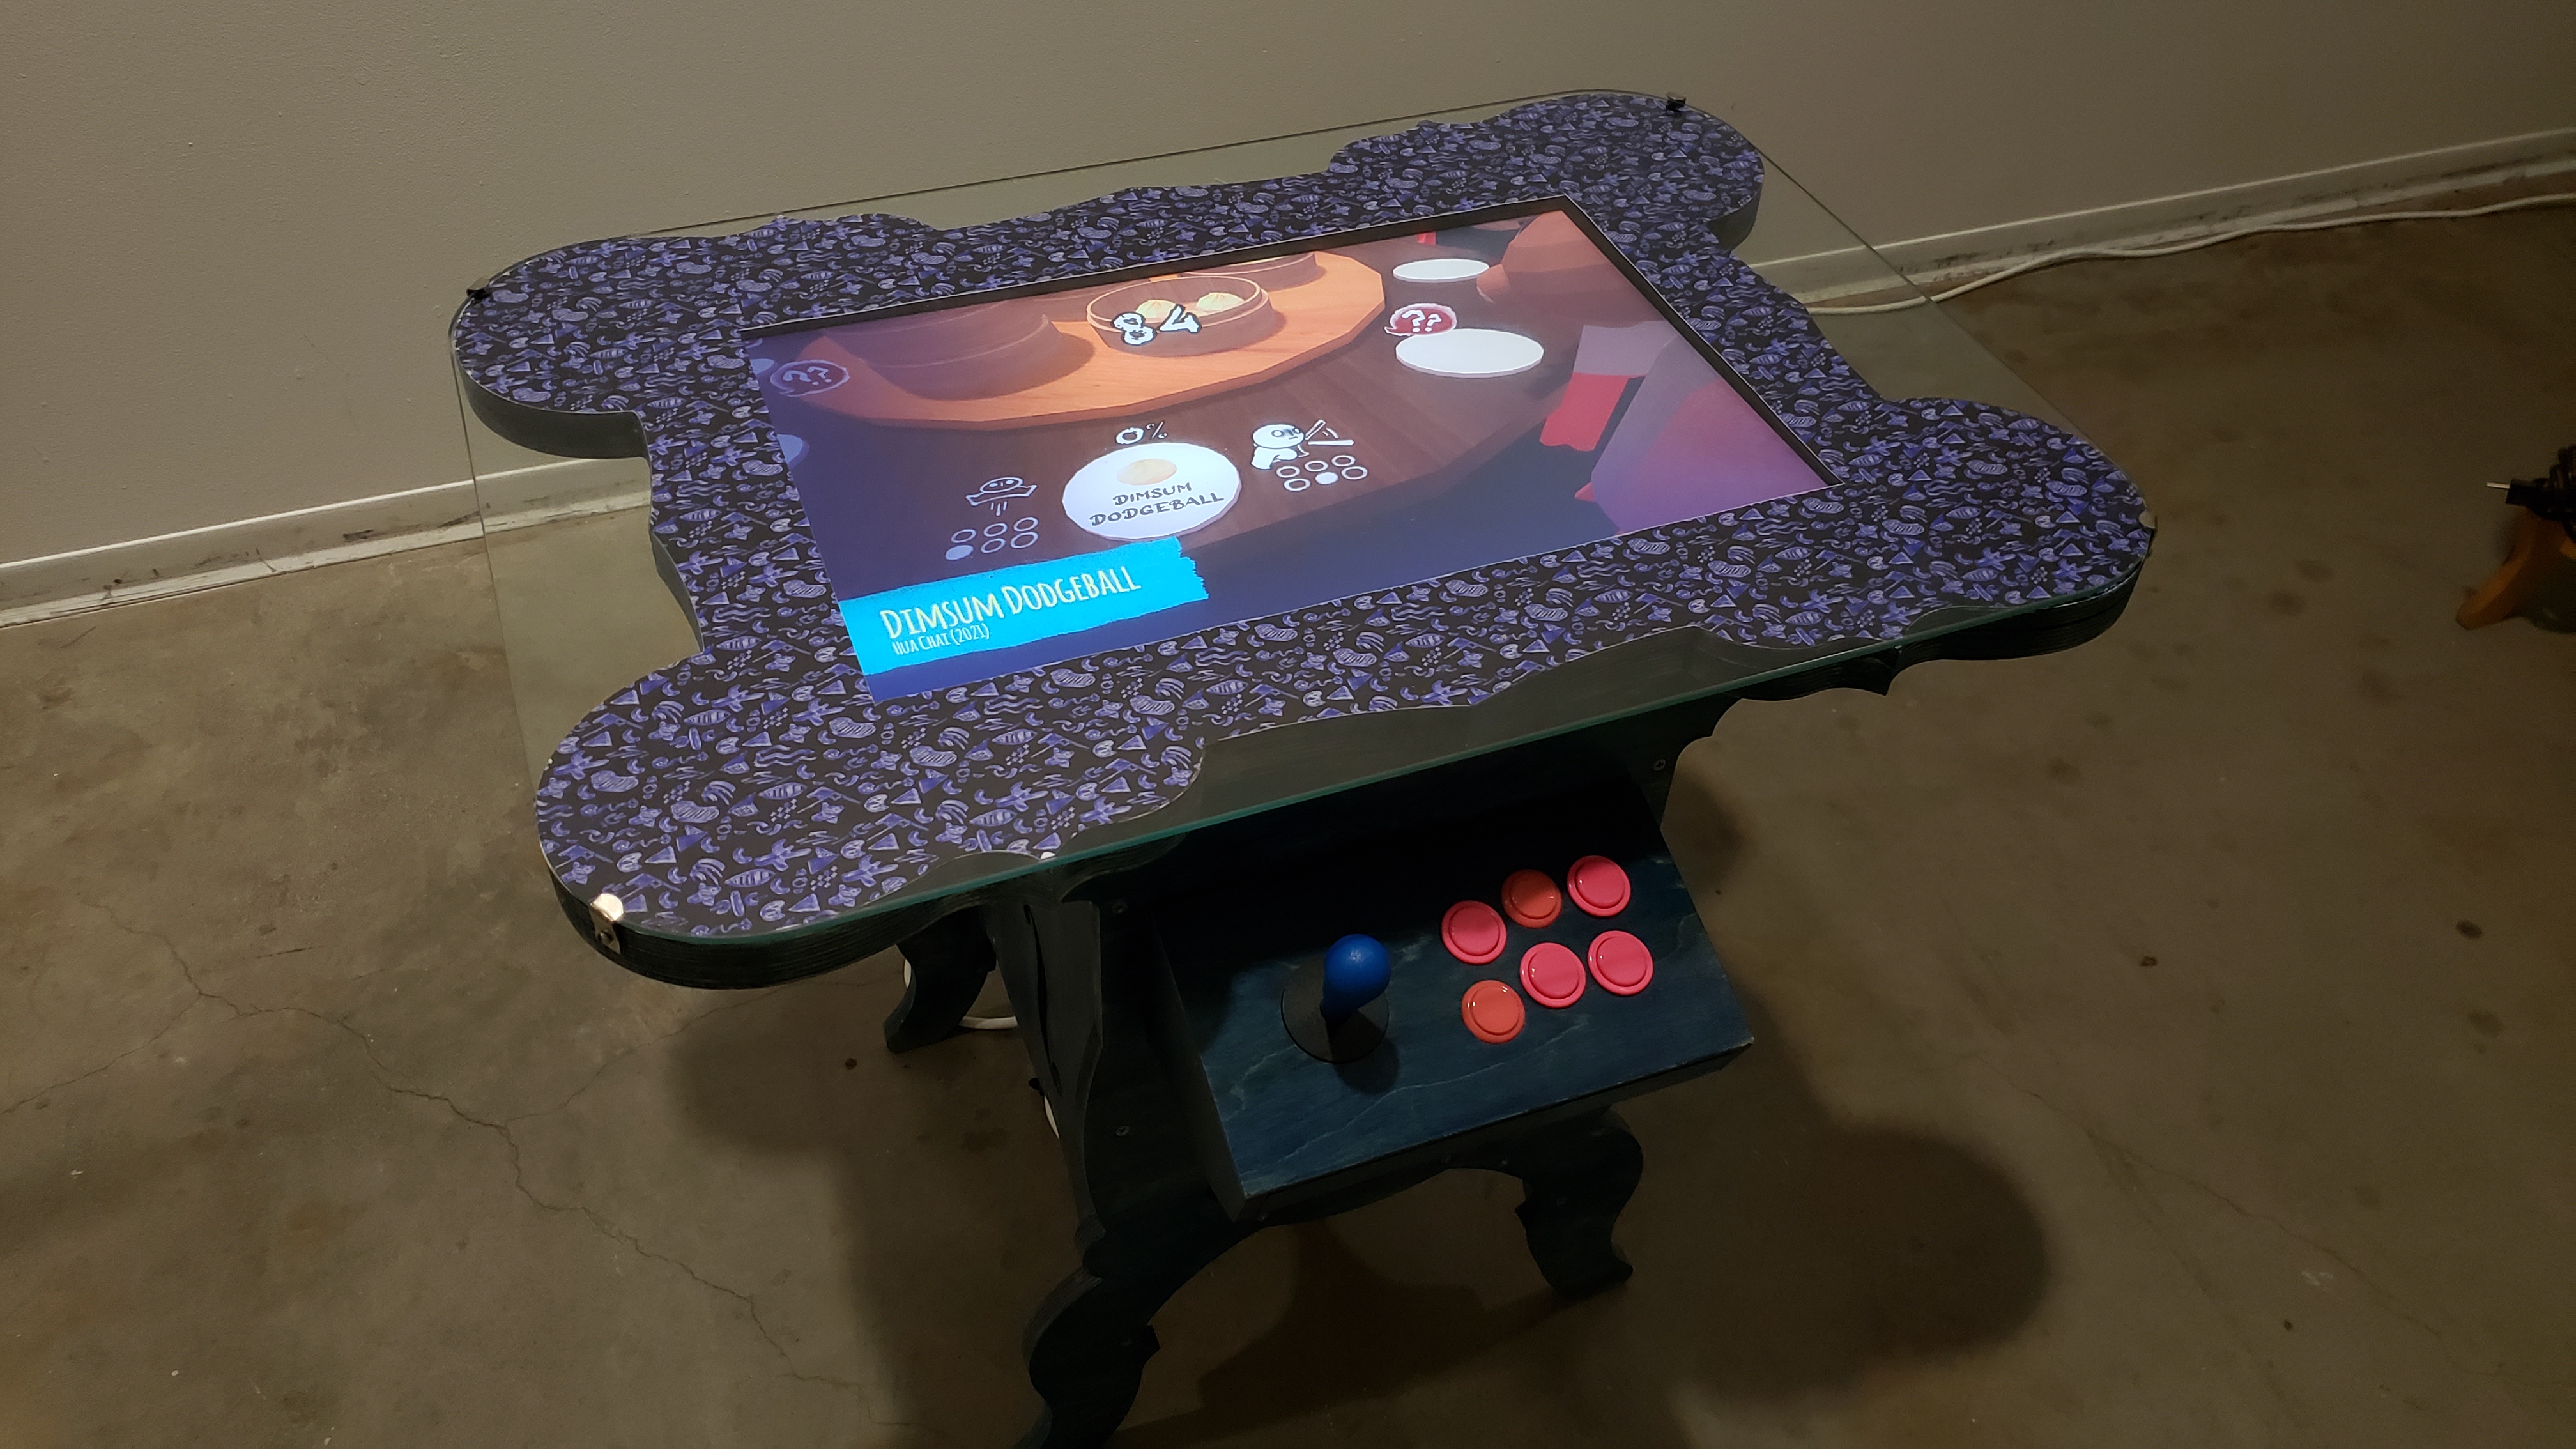 Dimsum Dodgeball in Arcade Table setup